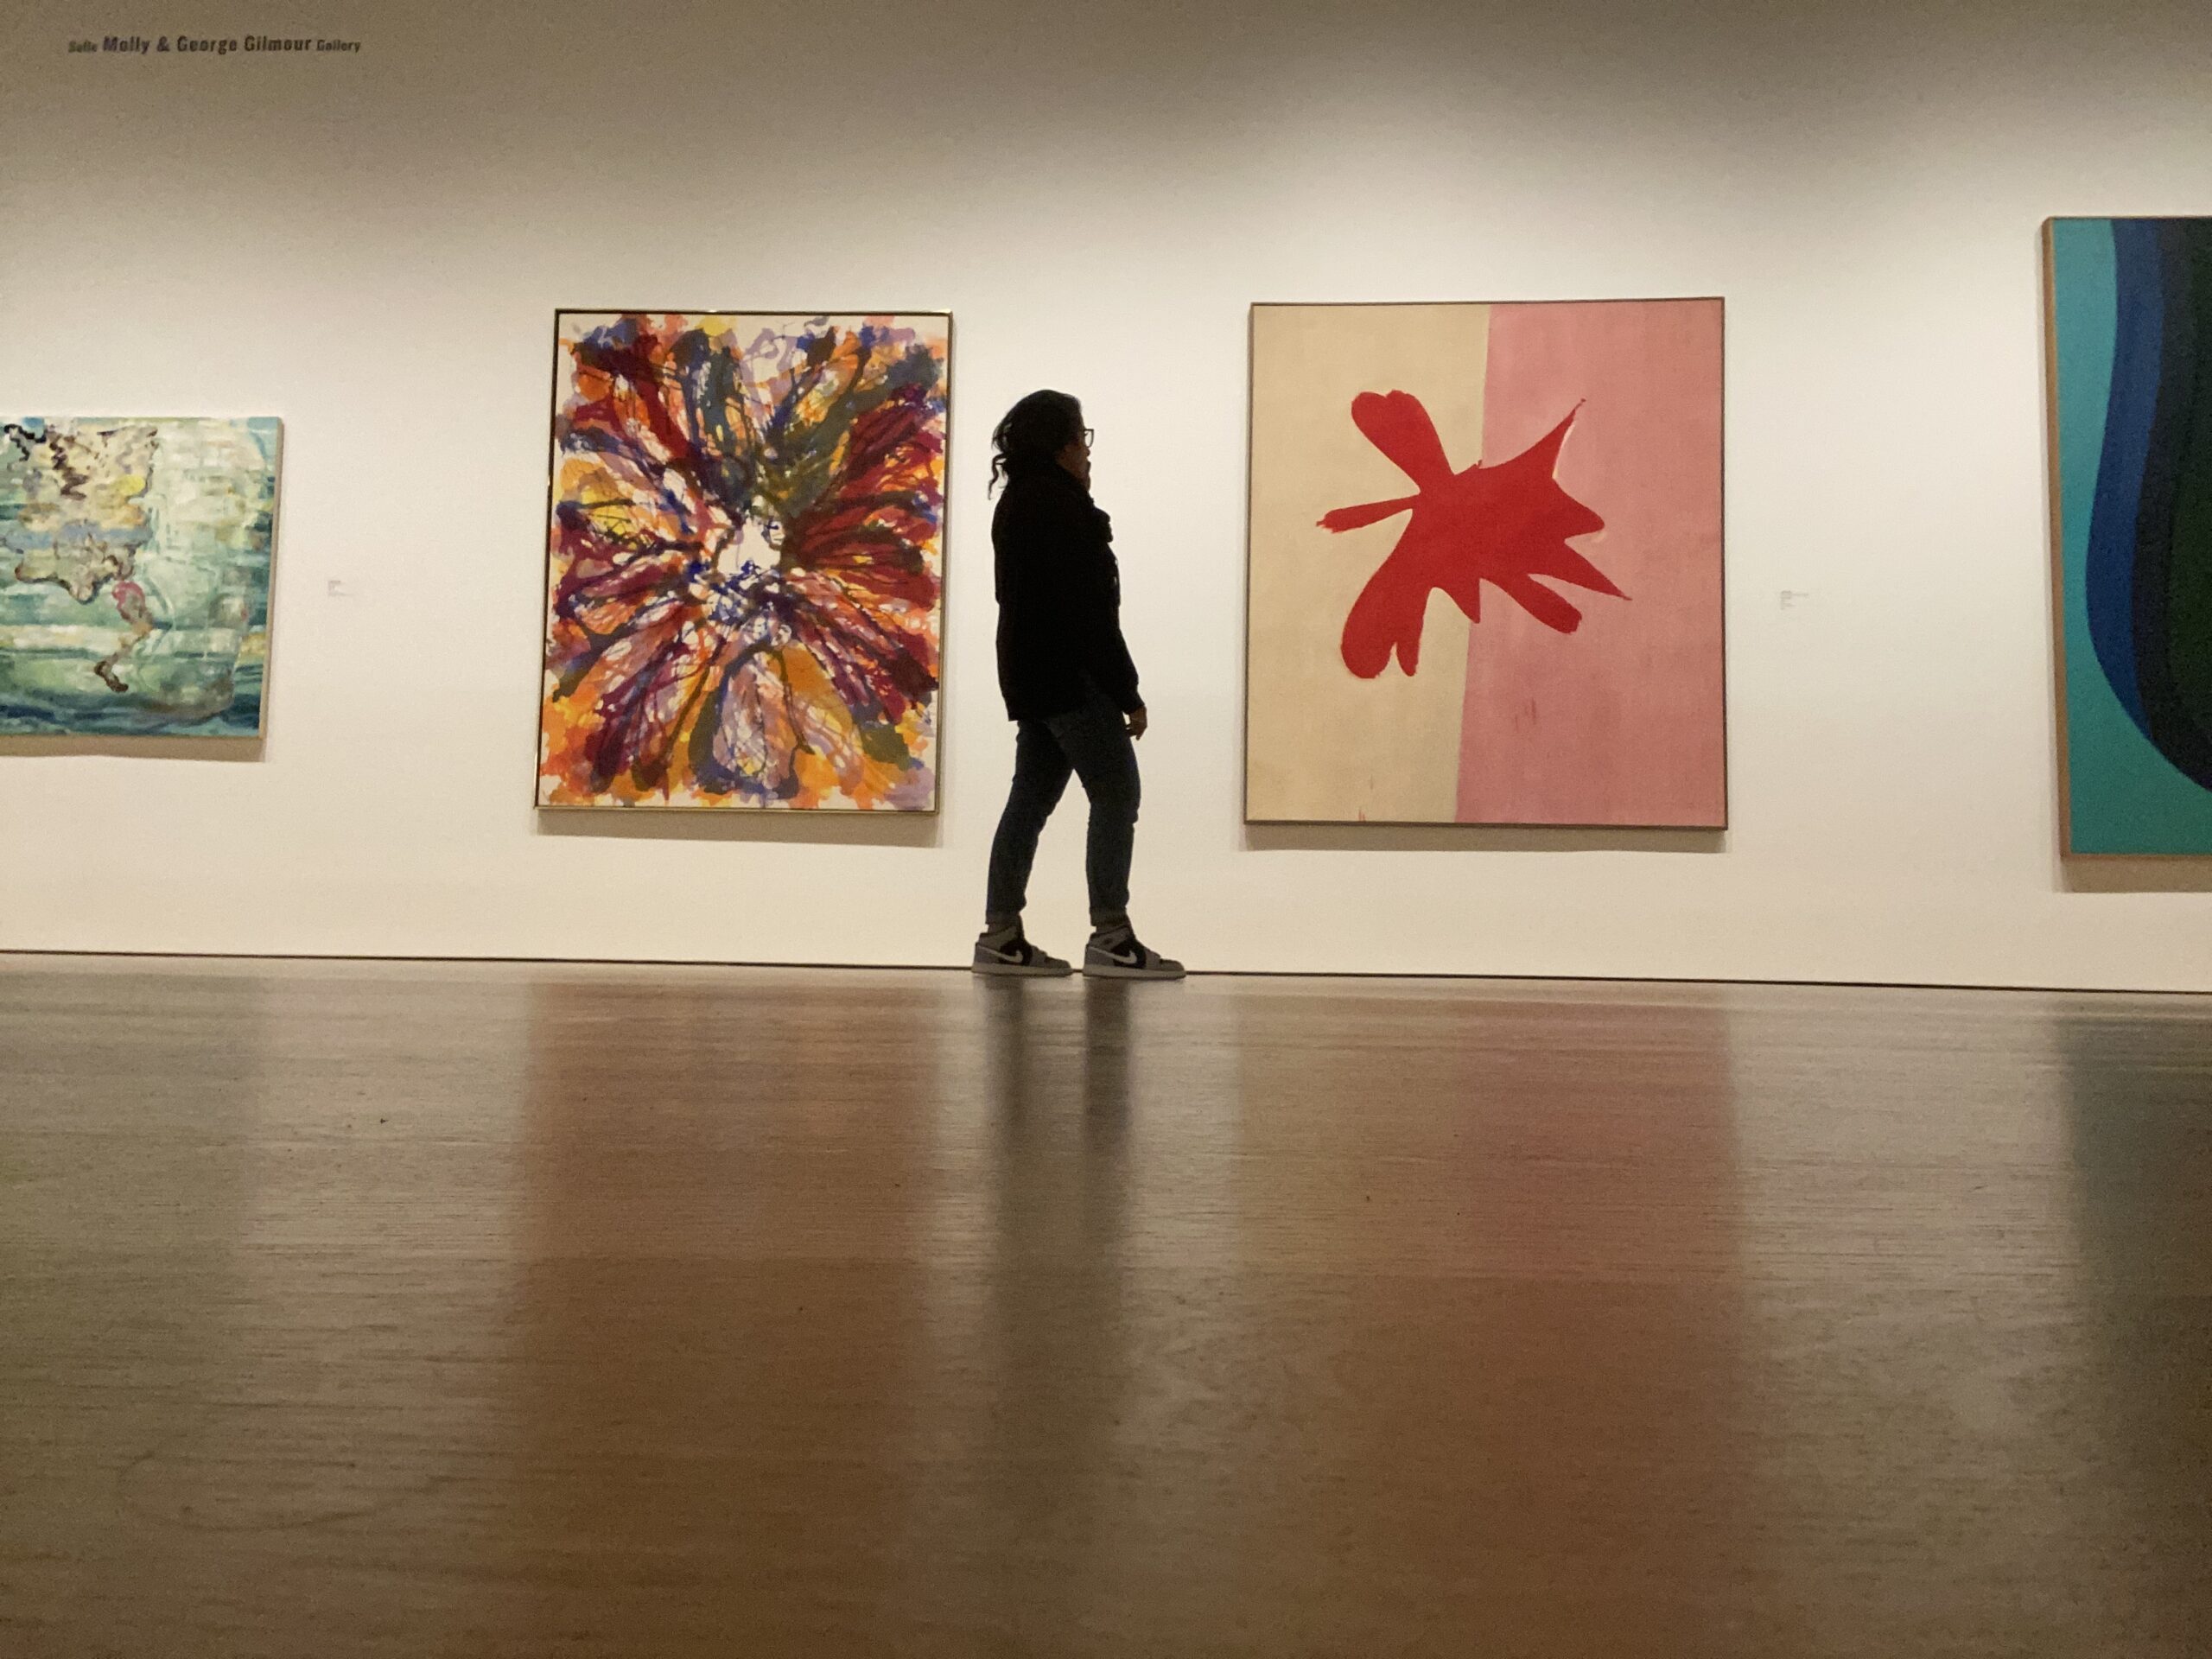 Art Gallery, That girl, millennial Mom, cultured, toronto creatives, Dundas, Toronto, art gallery